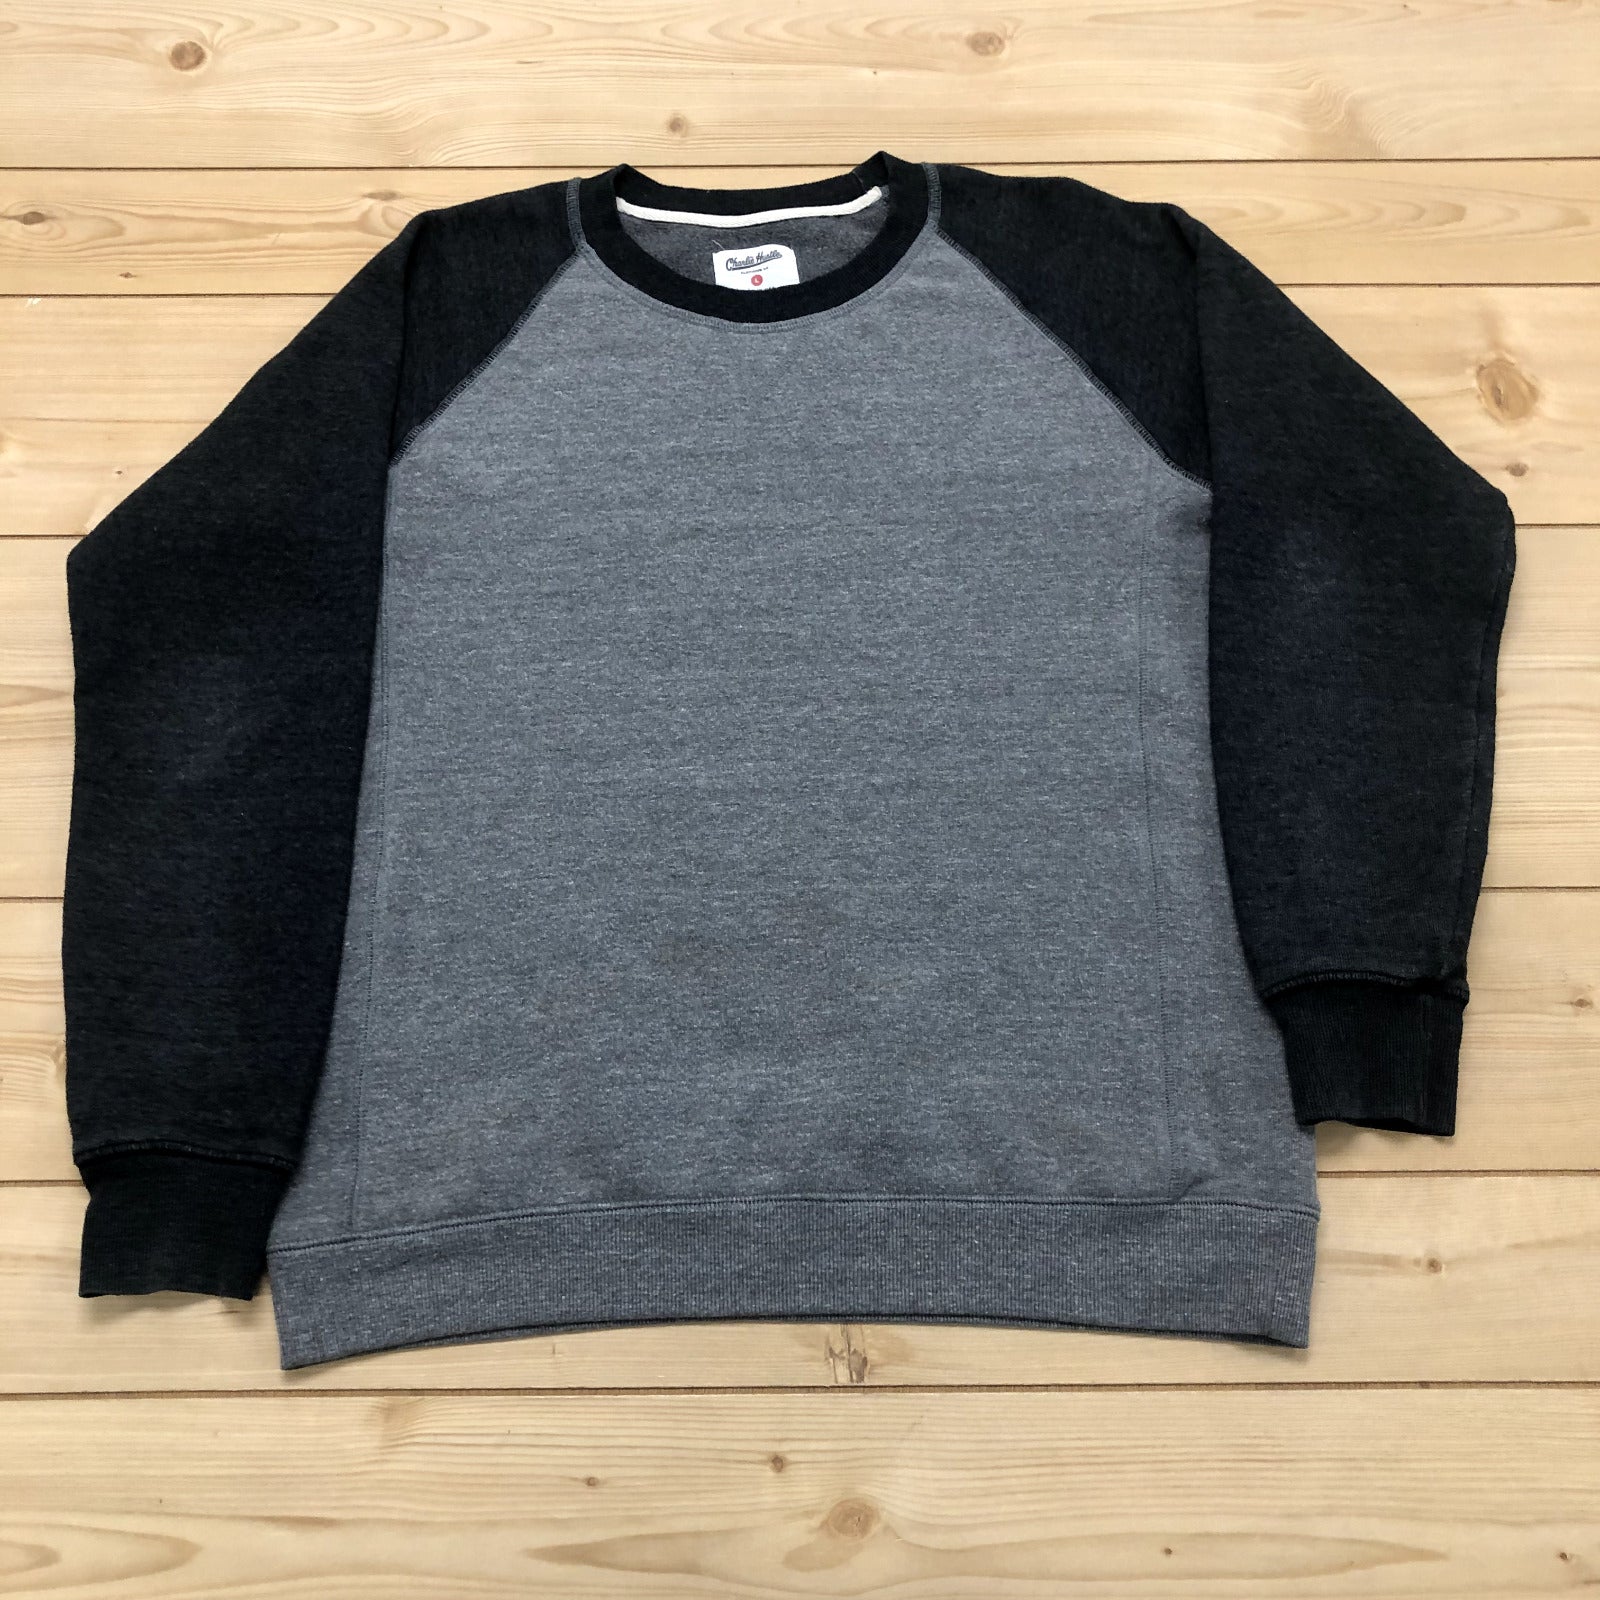 Charlie Hustle Black & Grey Soft Long Sleeve Pullover Sweatshirt Adult Size L